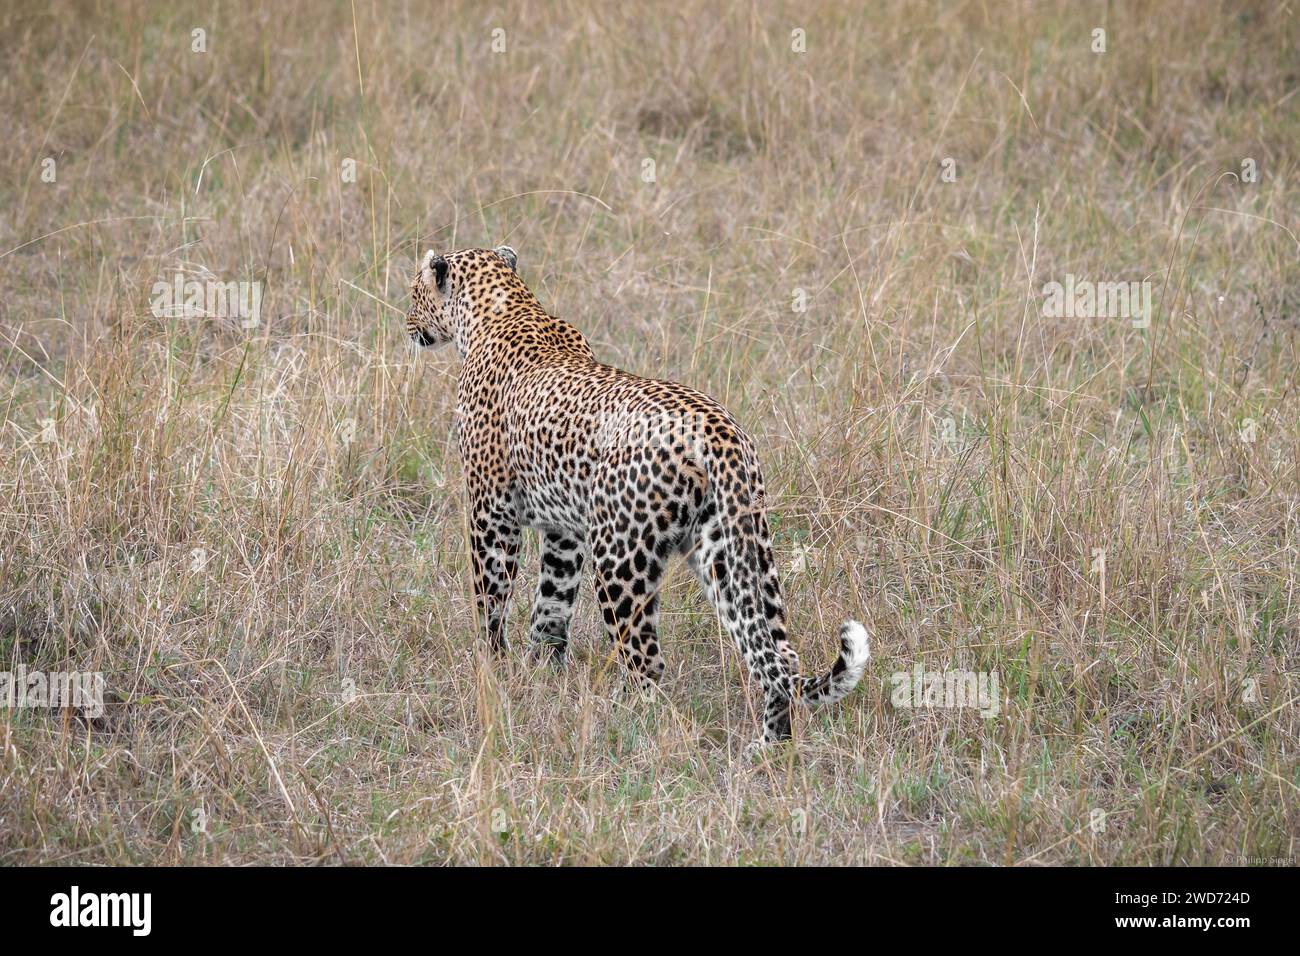 A cheetah moving across arid grassland in a safari in Kenya Stock Photo